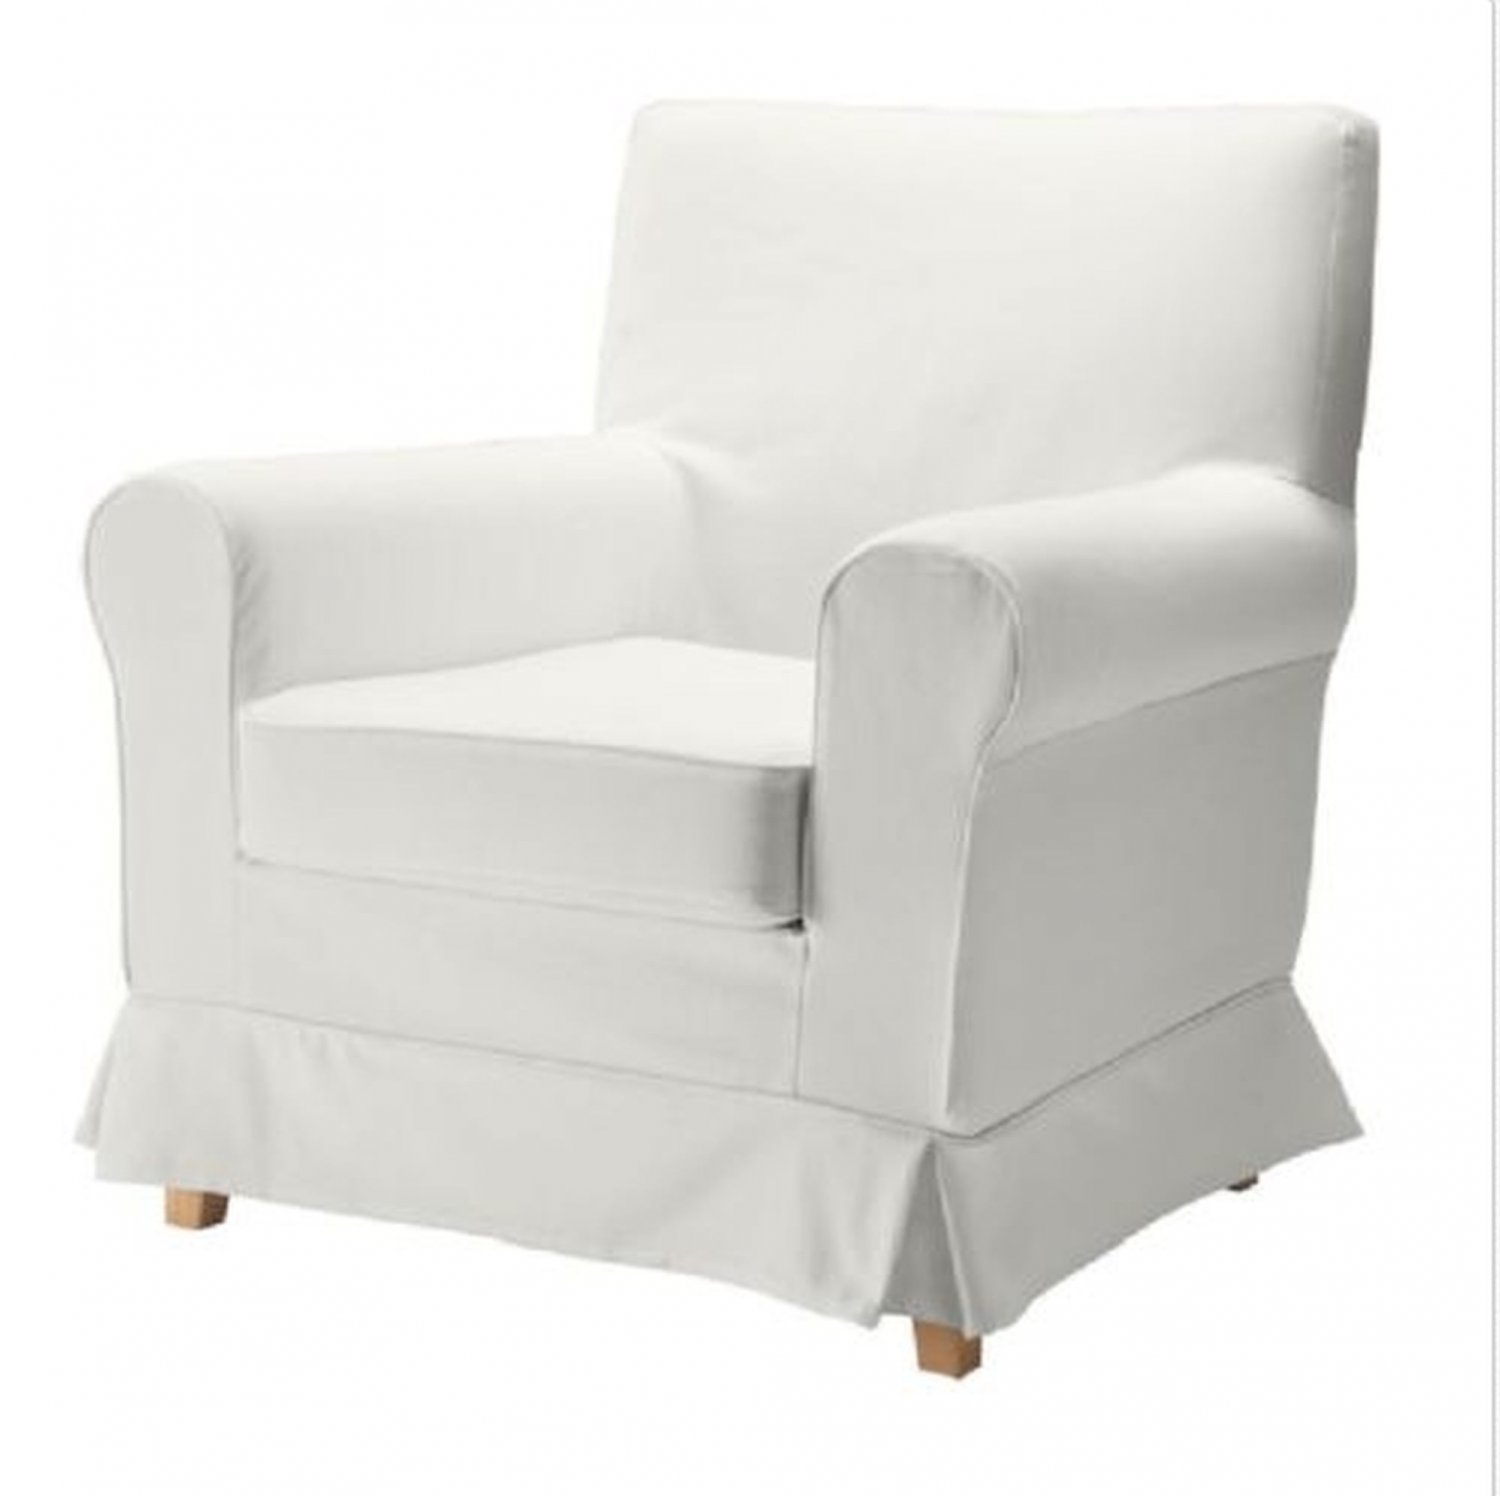 Ikea Armchair Covers Ektorp : IKEA EKTORP Armchair COVER Chair